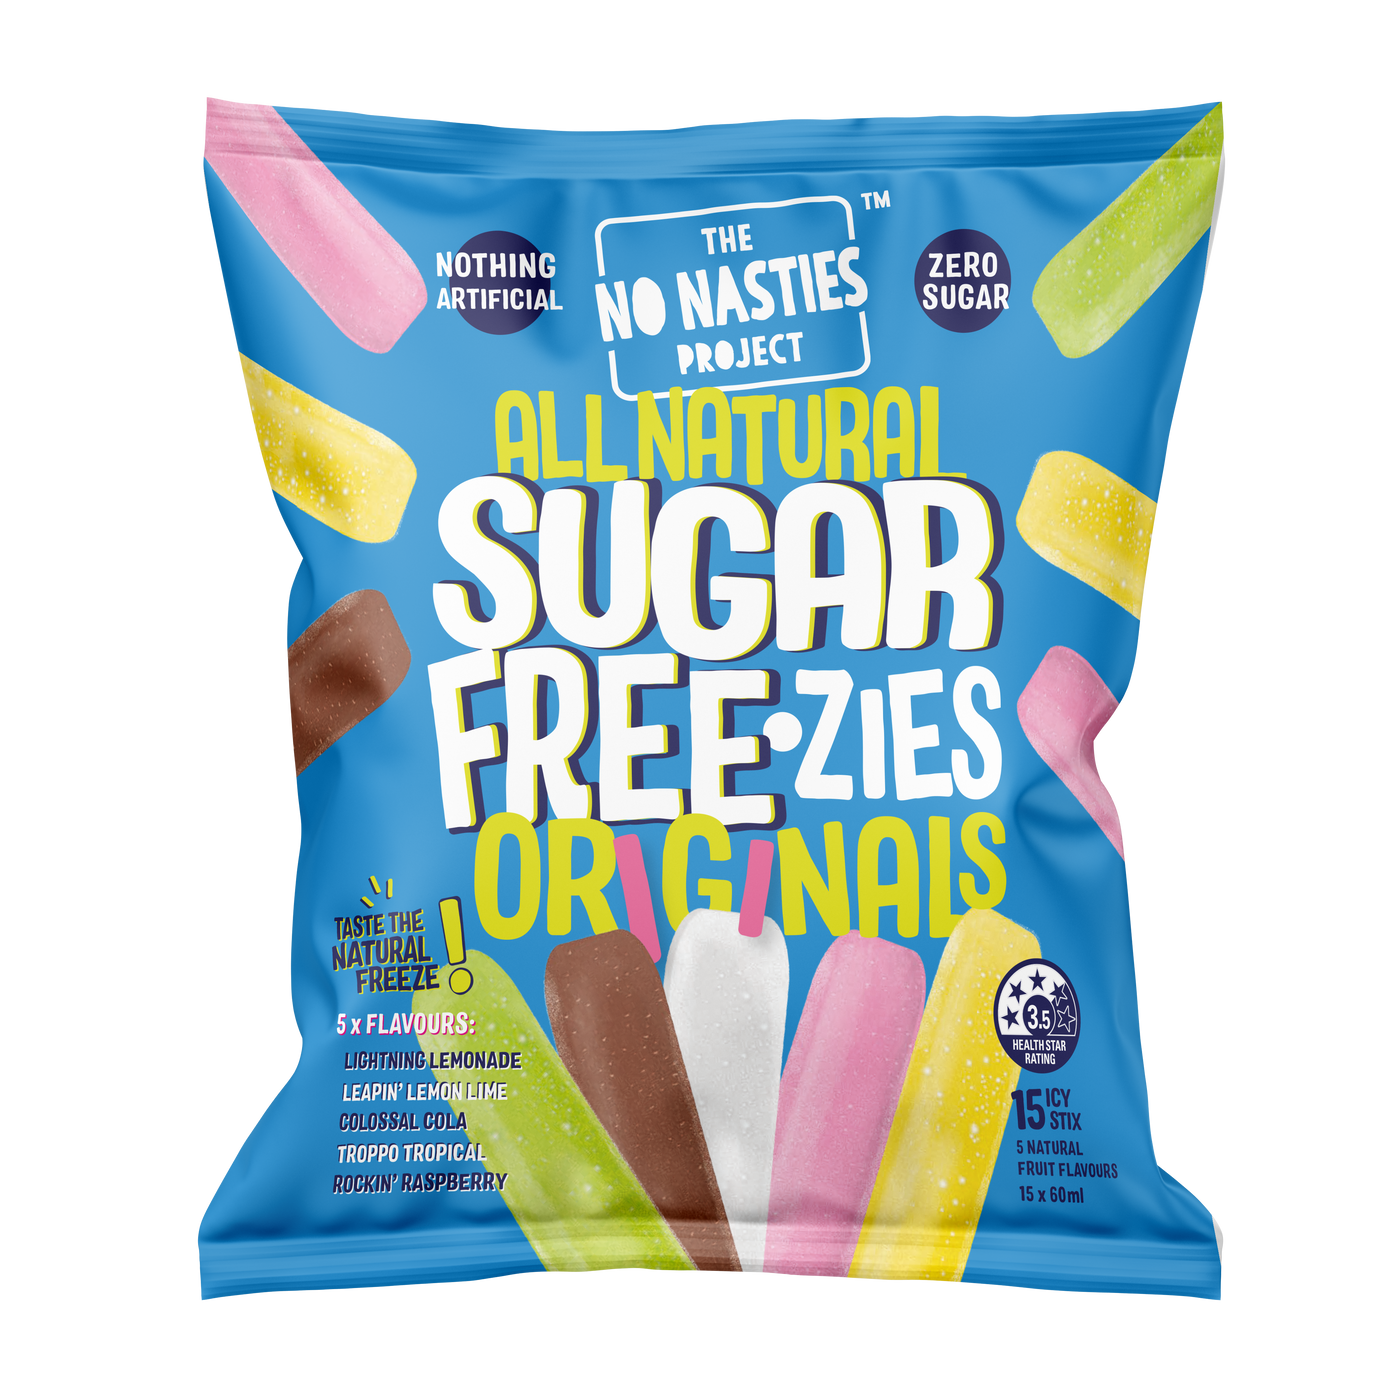 The No Nasties Project Original Sugar FREE‑zies